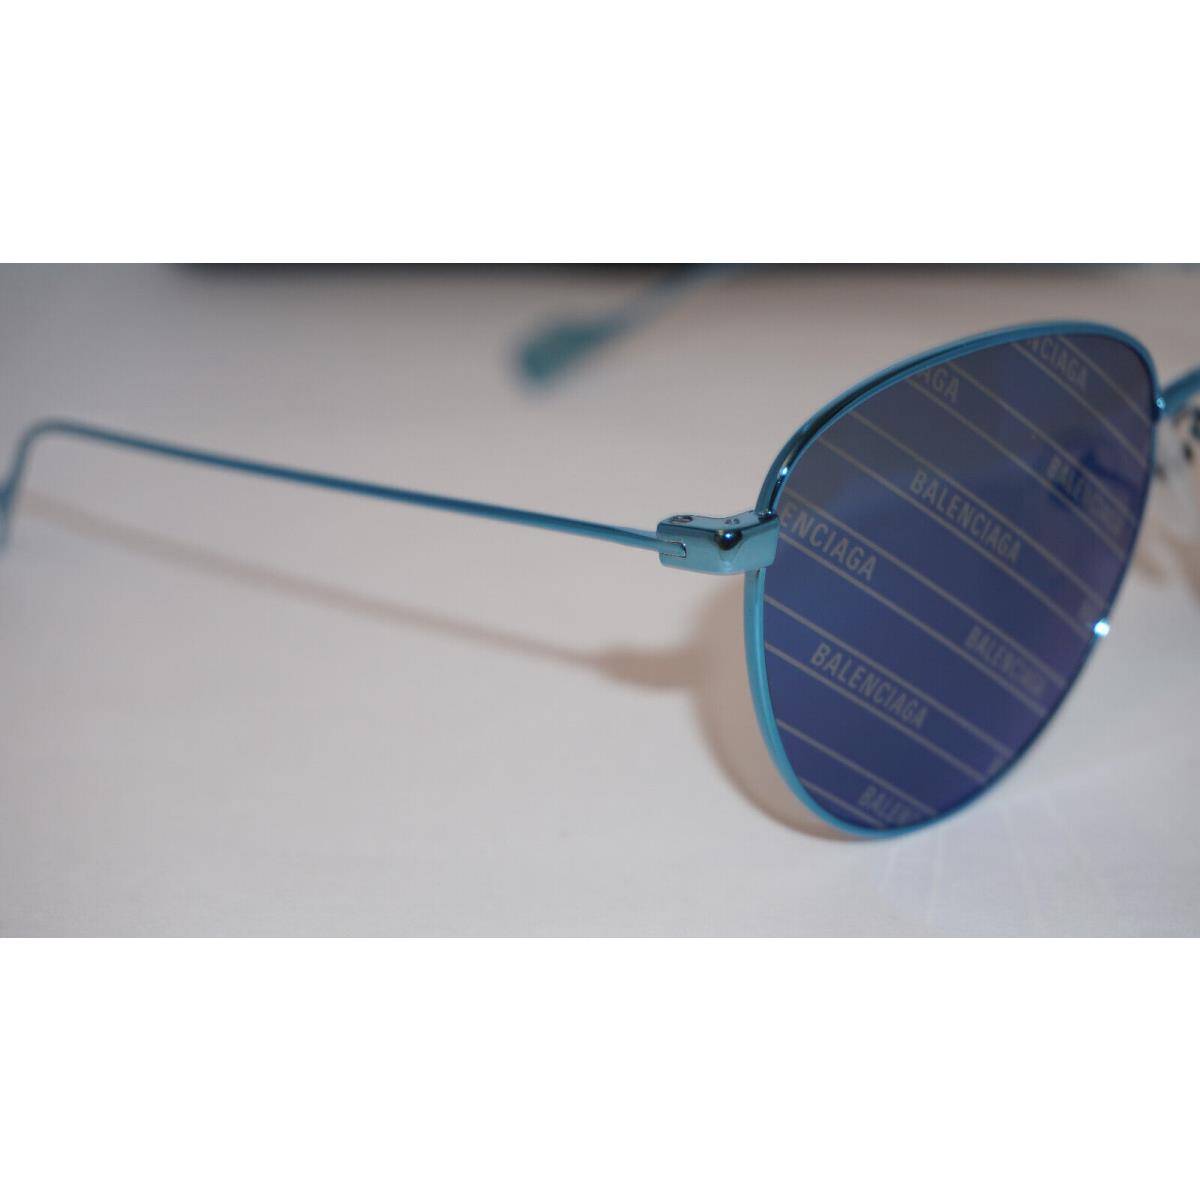 Balenciaga sunglasses  - Aviator Green Green Imprint , Aviator Green Frame, Green Imprint Lens